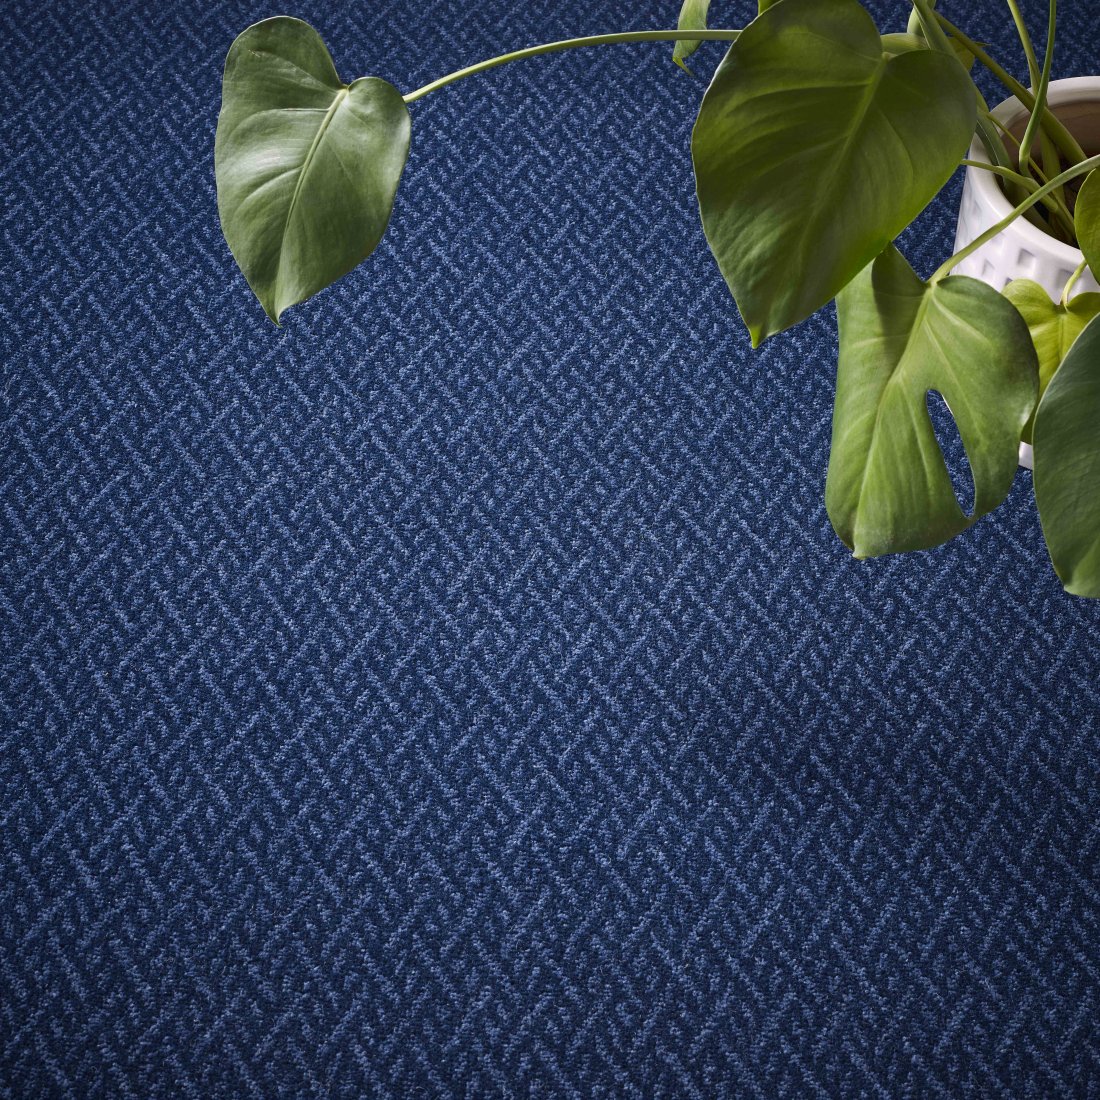 Durham Edition Pattern Wool Carpet - Marine